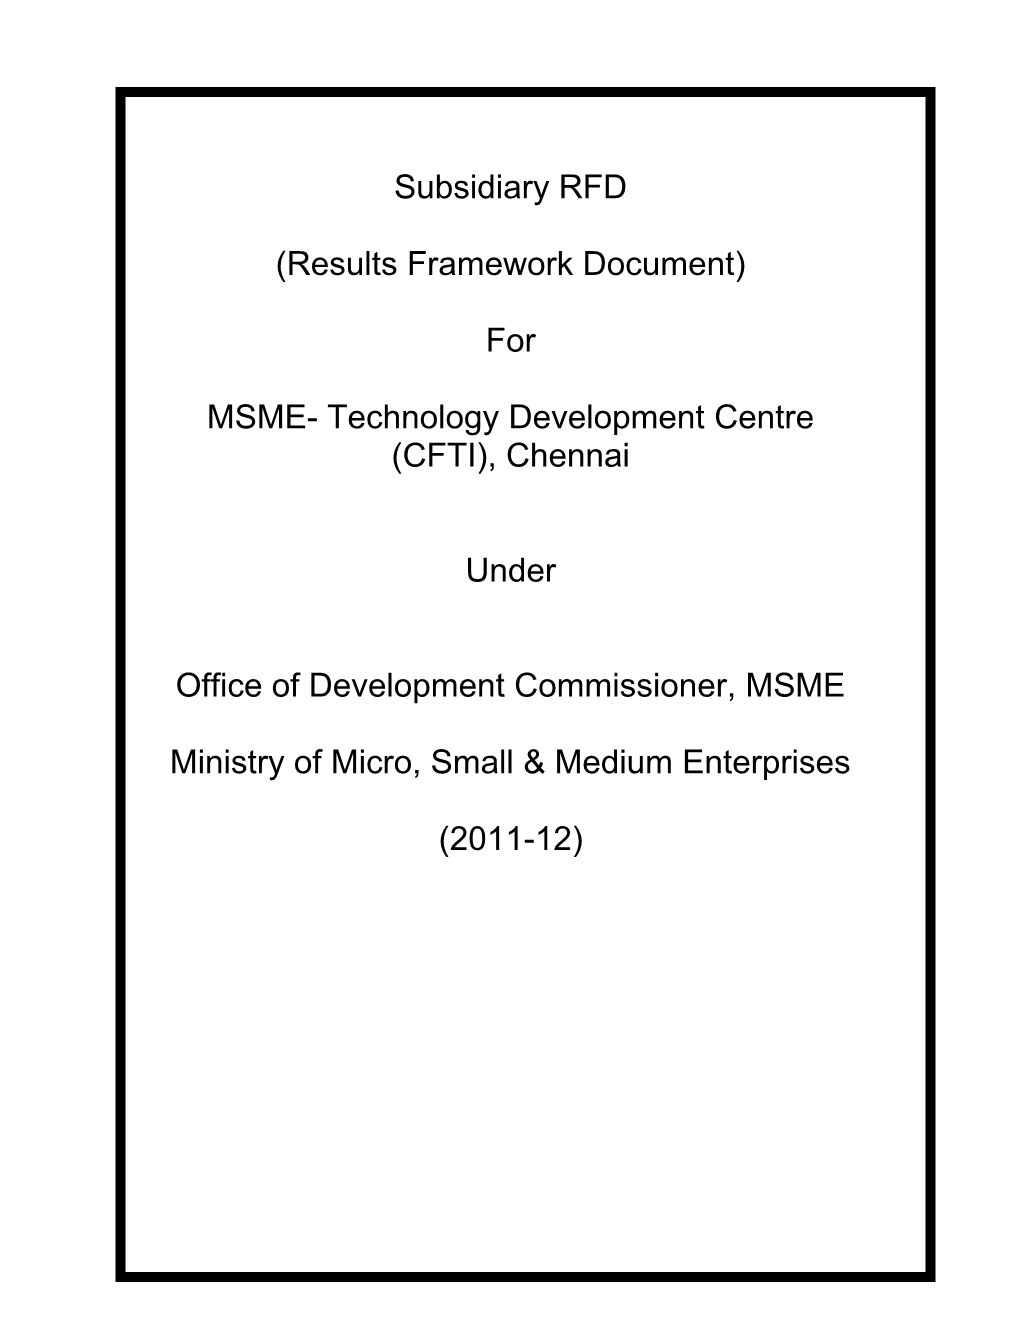 MSME- Technology Development Centre (CFTI), Chennai